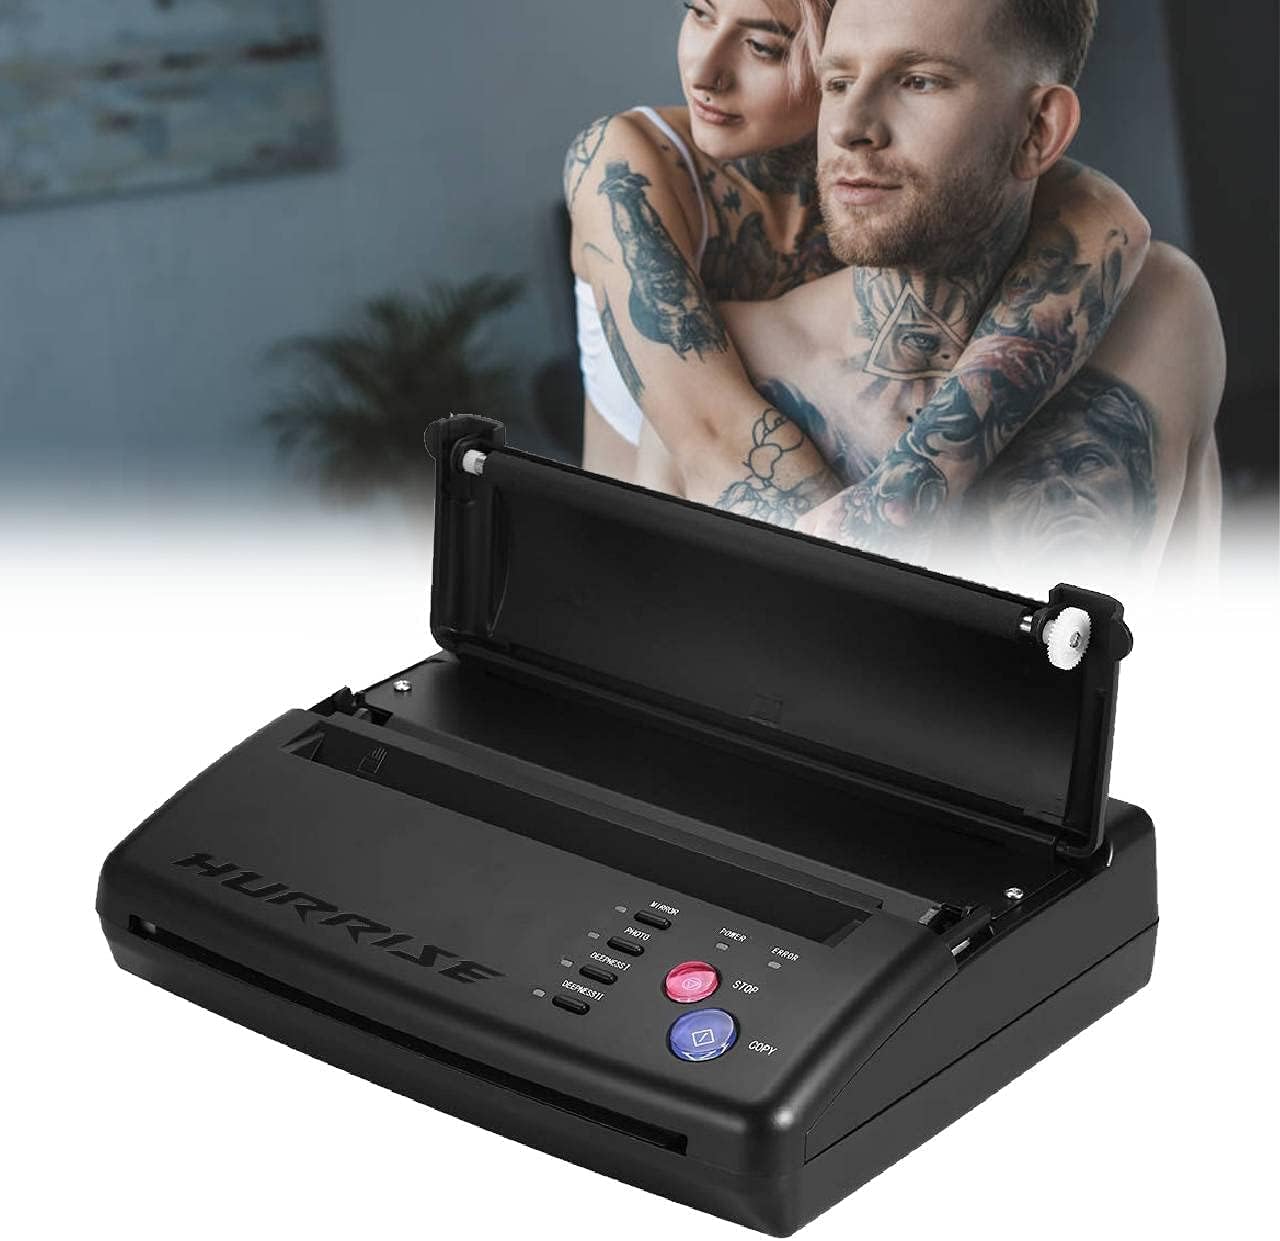 HURRISE Tattoo Transfer Stencil Machine, Thermal [...]